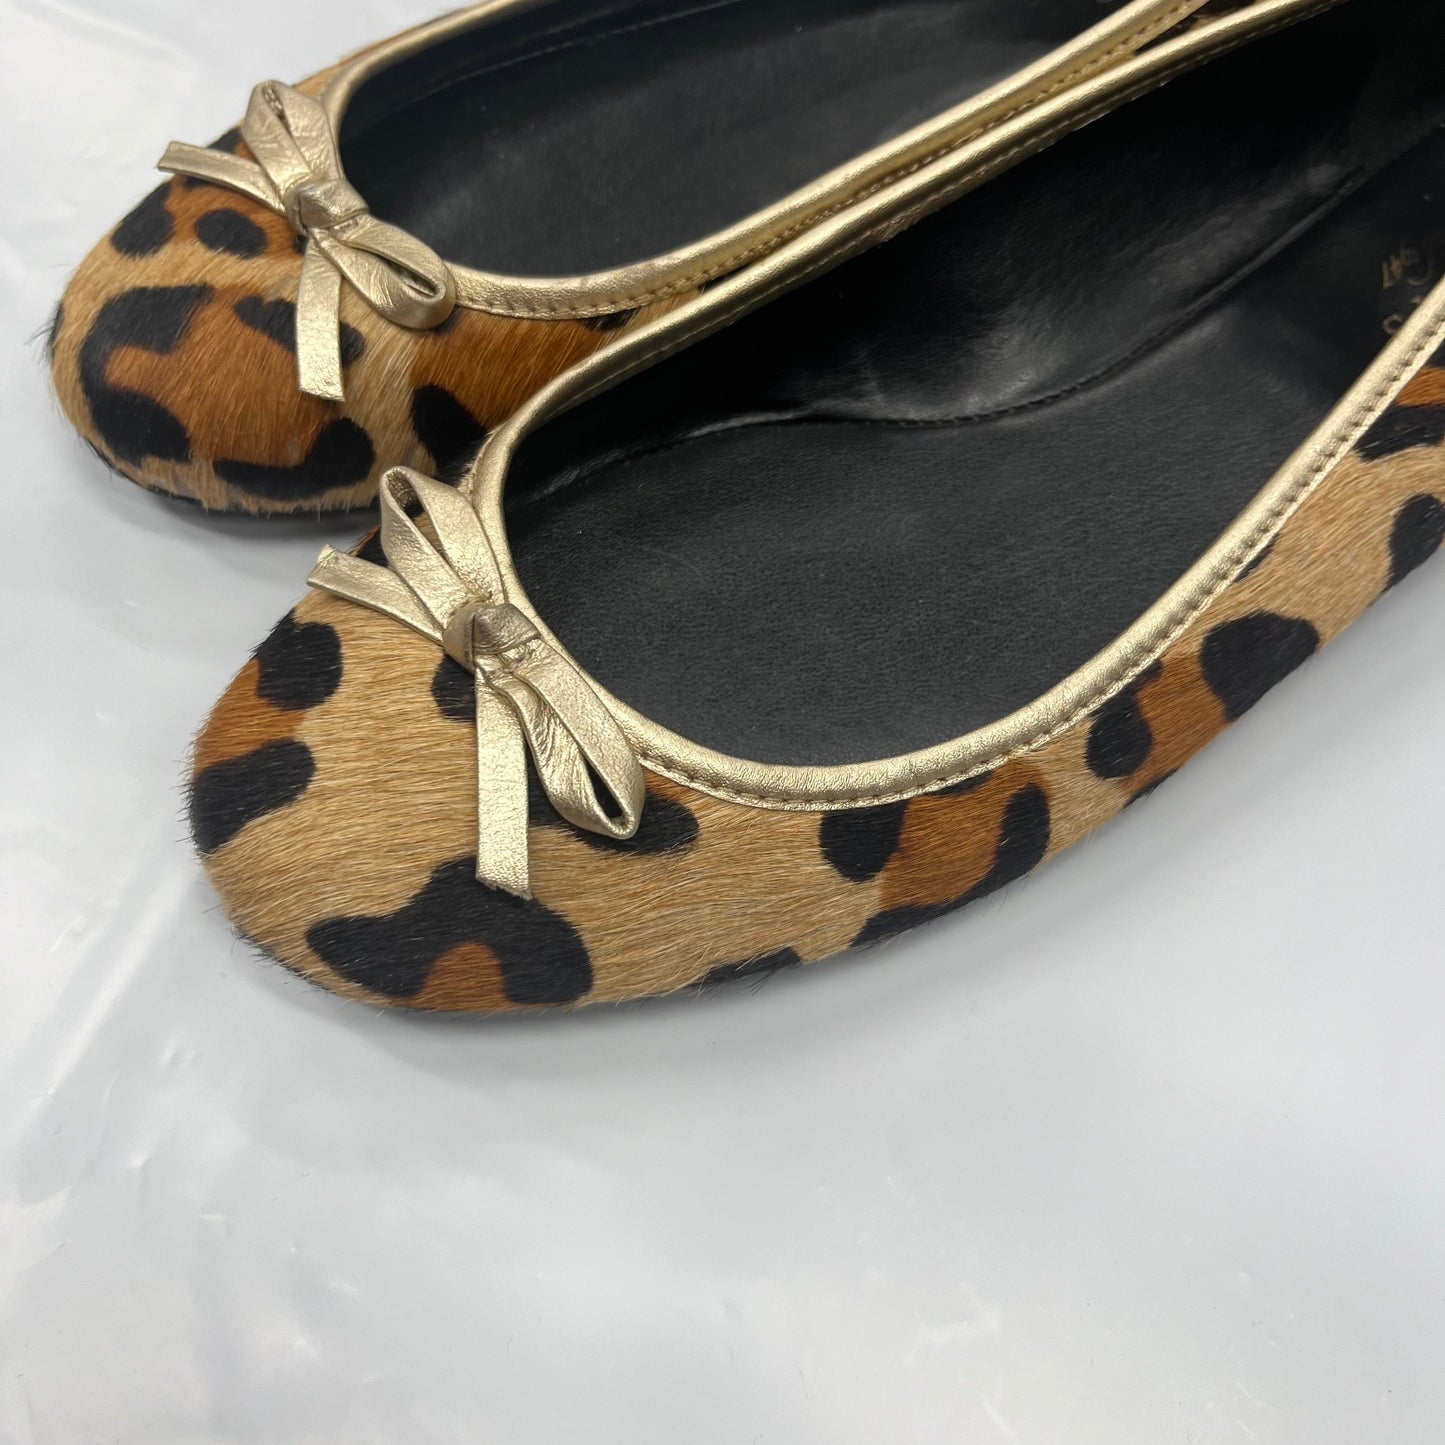 Animal Print Shoes Flats Ballet Talbots O, Size 9.5